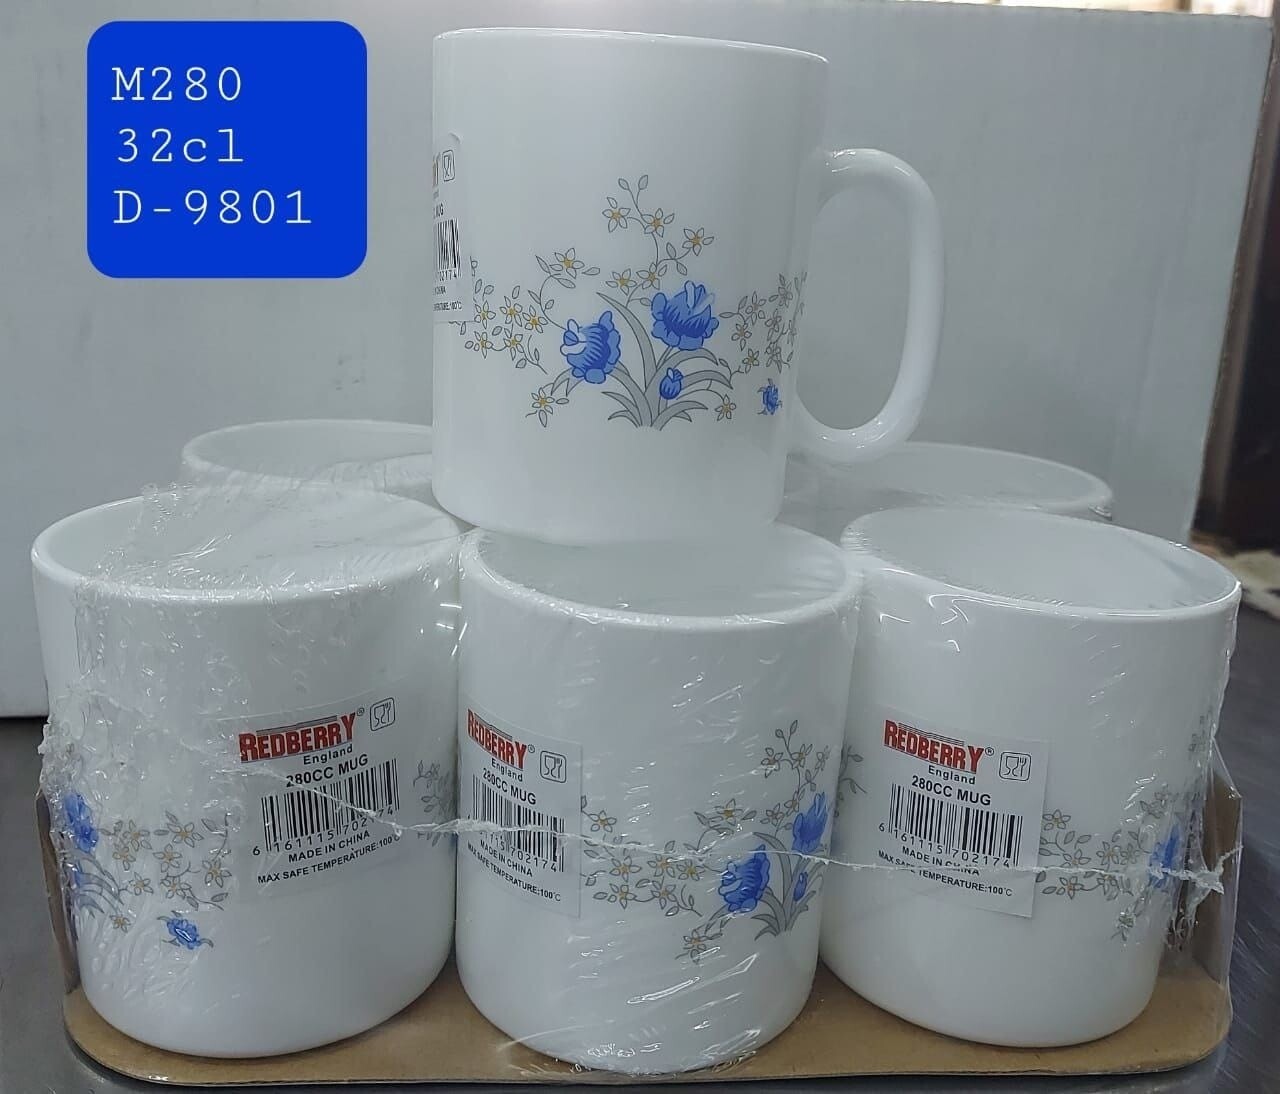 Redberry 6pcs set ceramic mugs D-9801